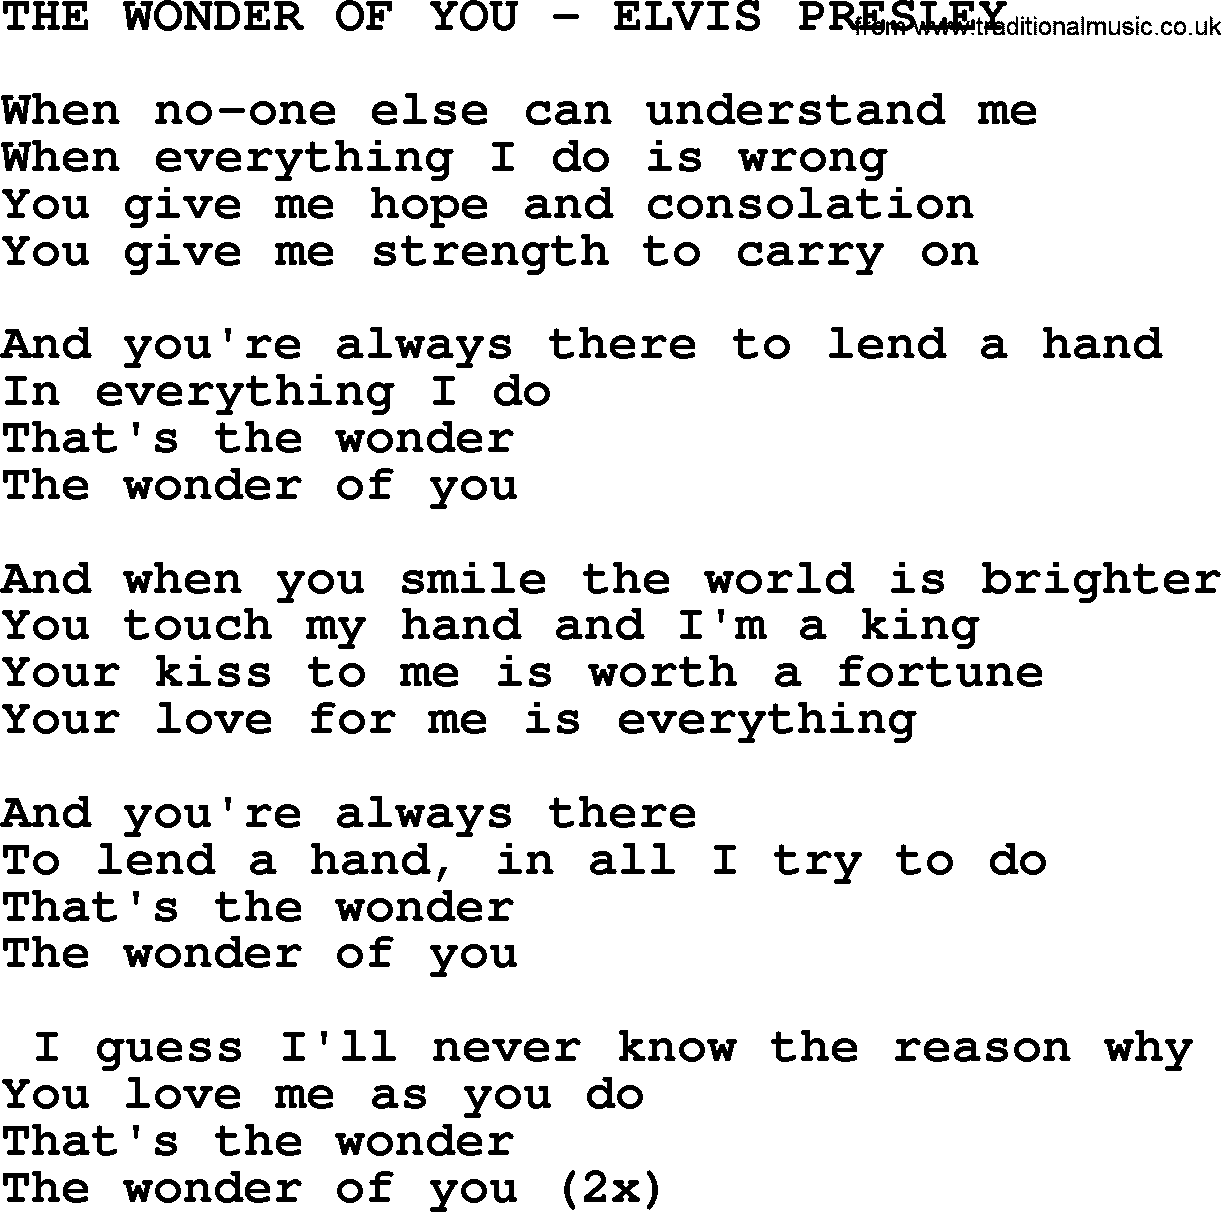 Elvis Presley song: The Wonder Of You-Elvis Presley-.txt lyrics and chords